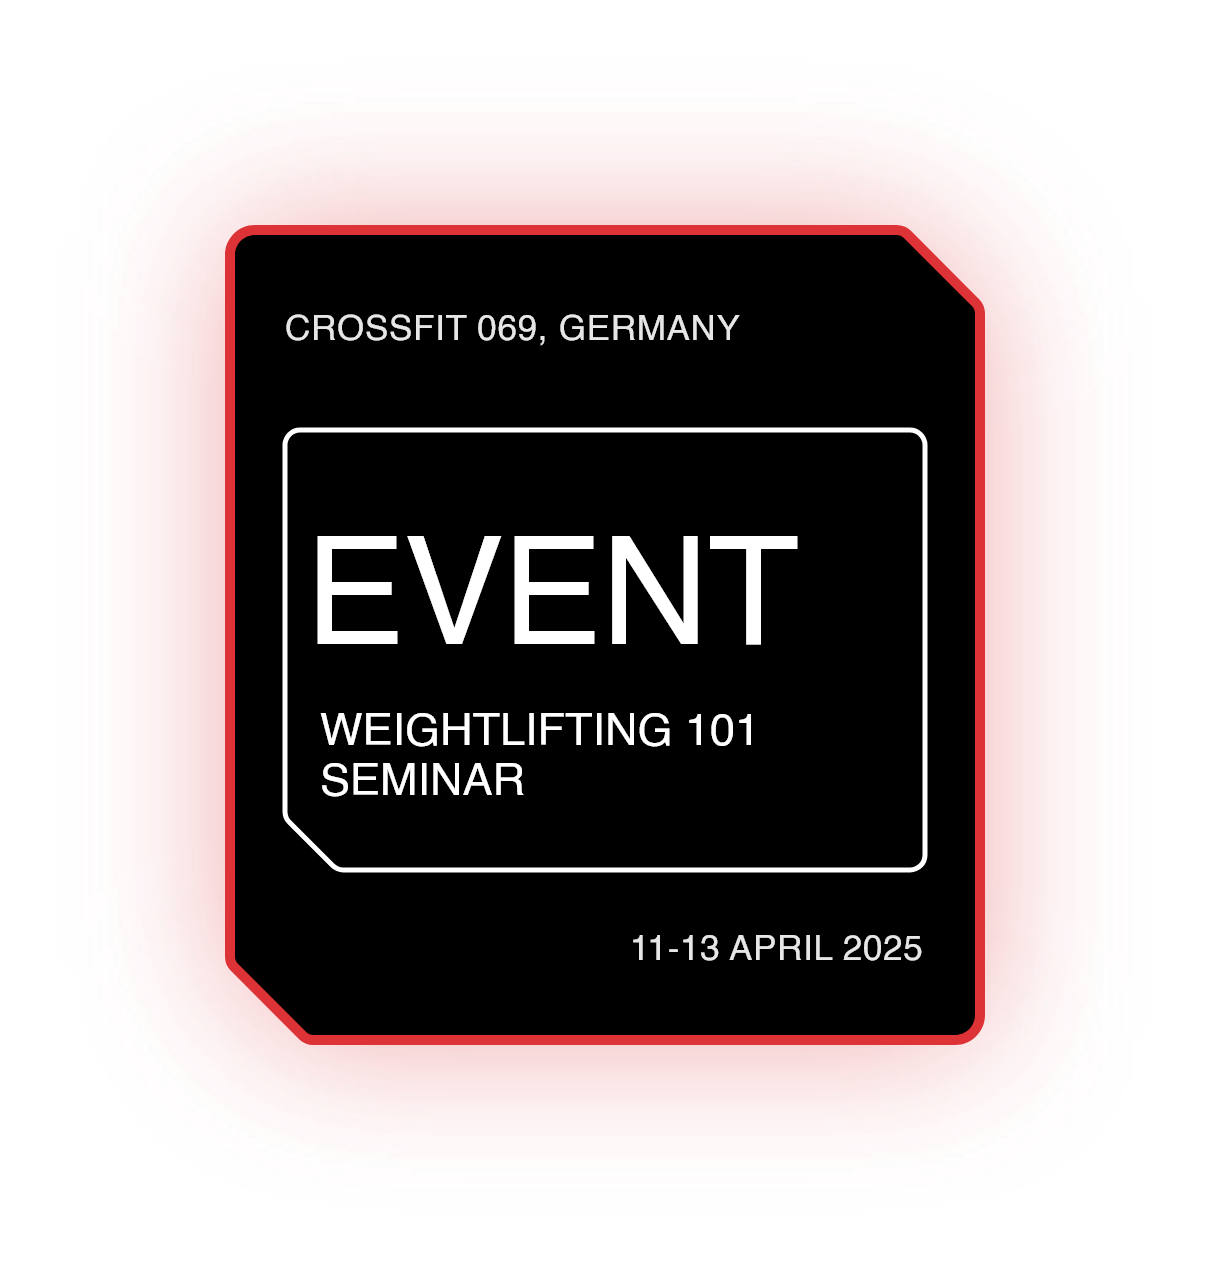 Weightlifting 101 Seminar - Frankfurt am Main, Germany